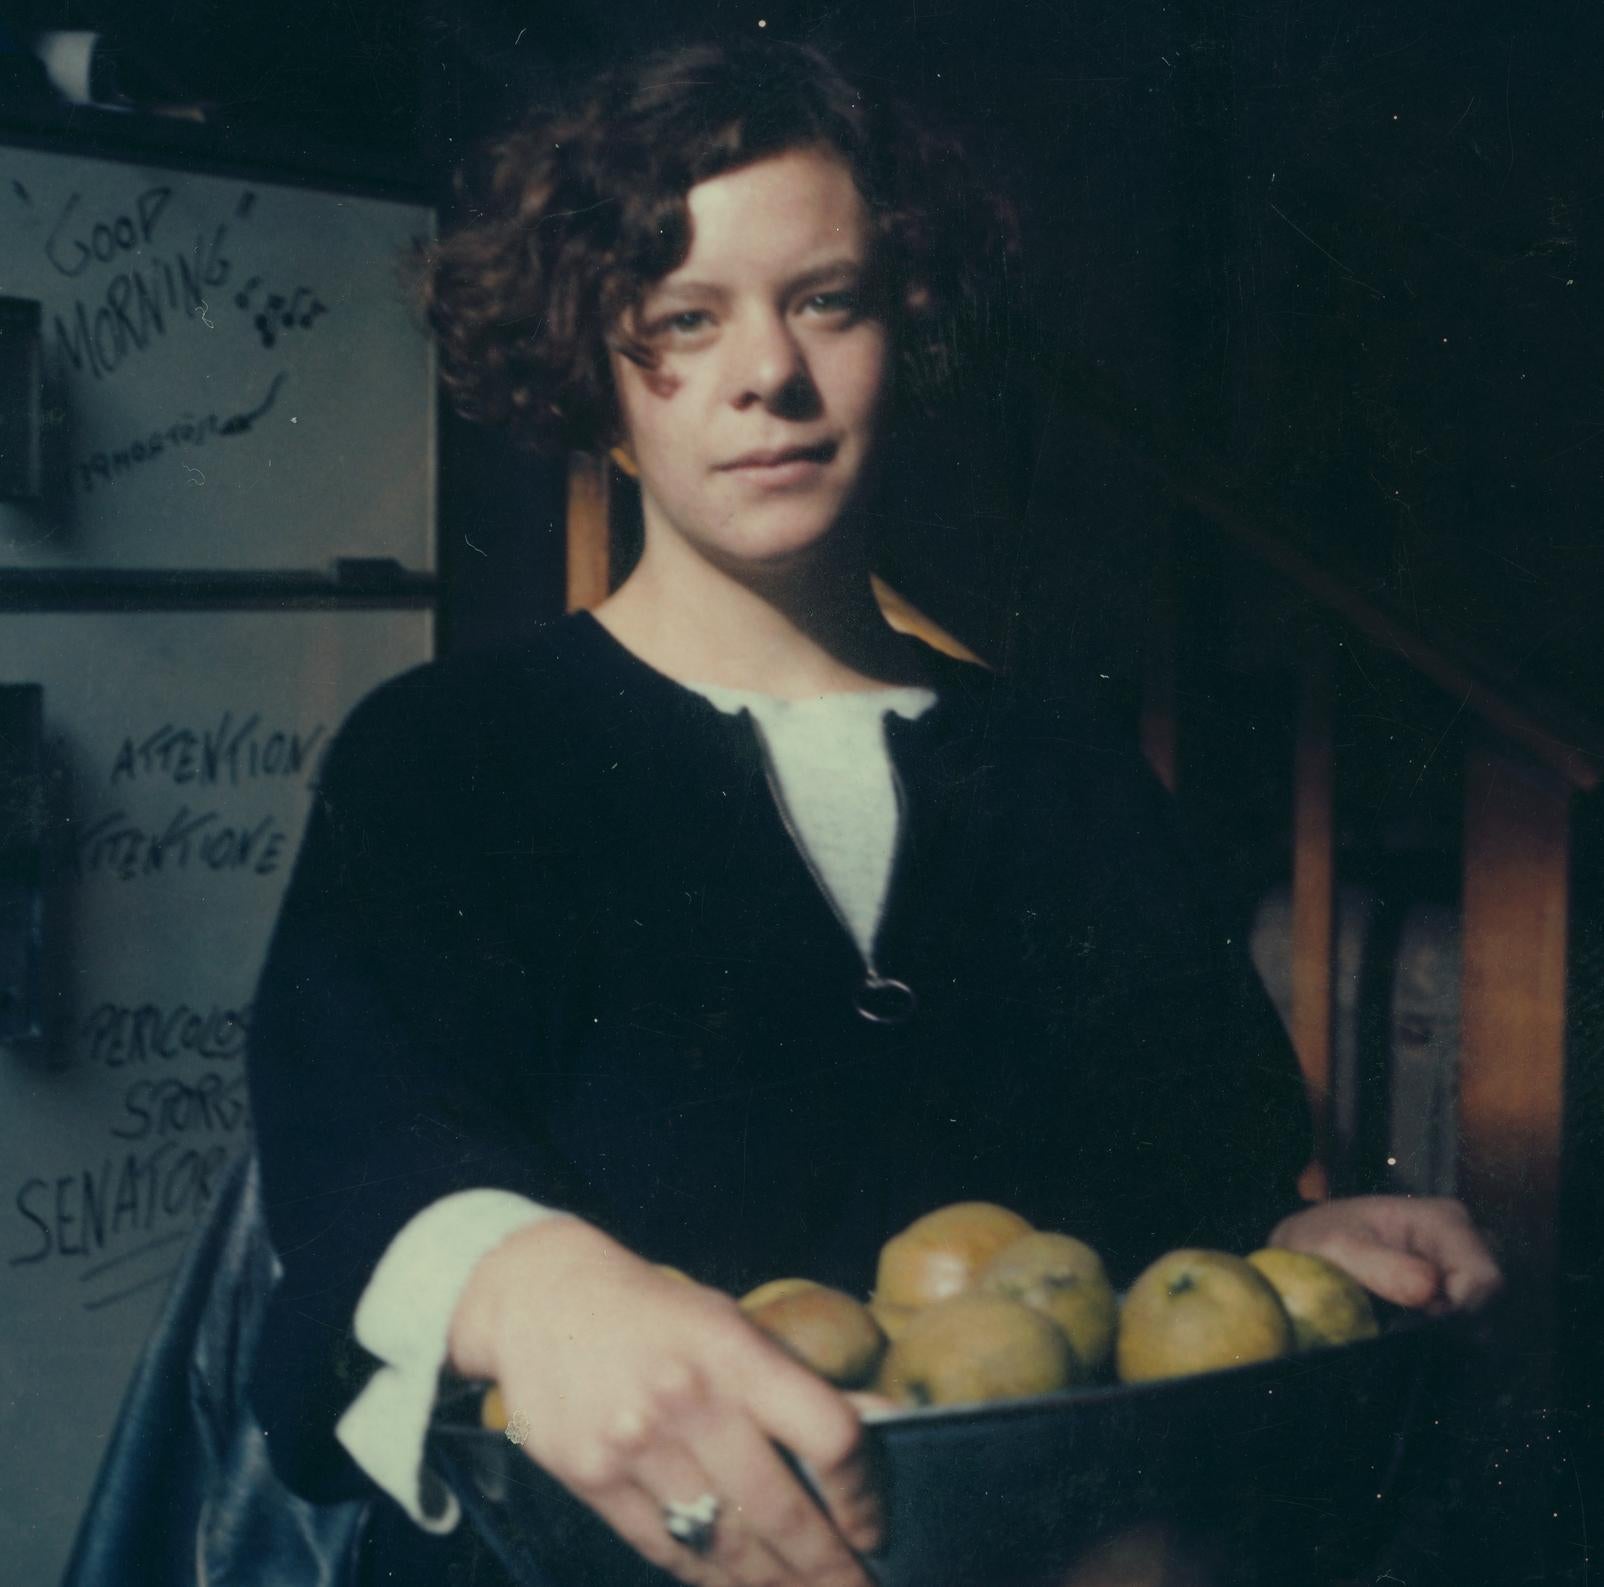 Esther, 1993 - Contemporary Photograph by Stefanie Schneider